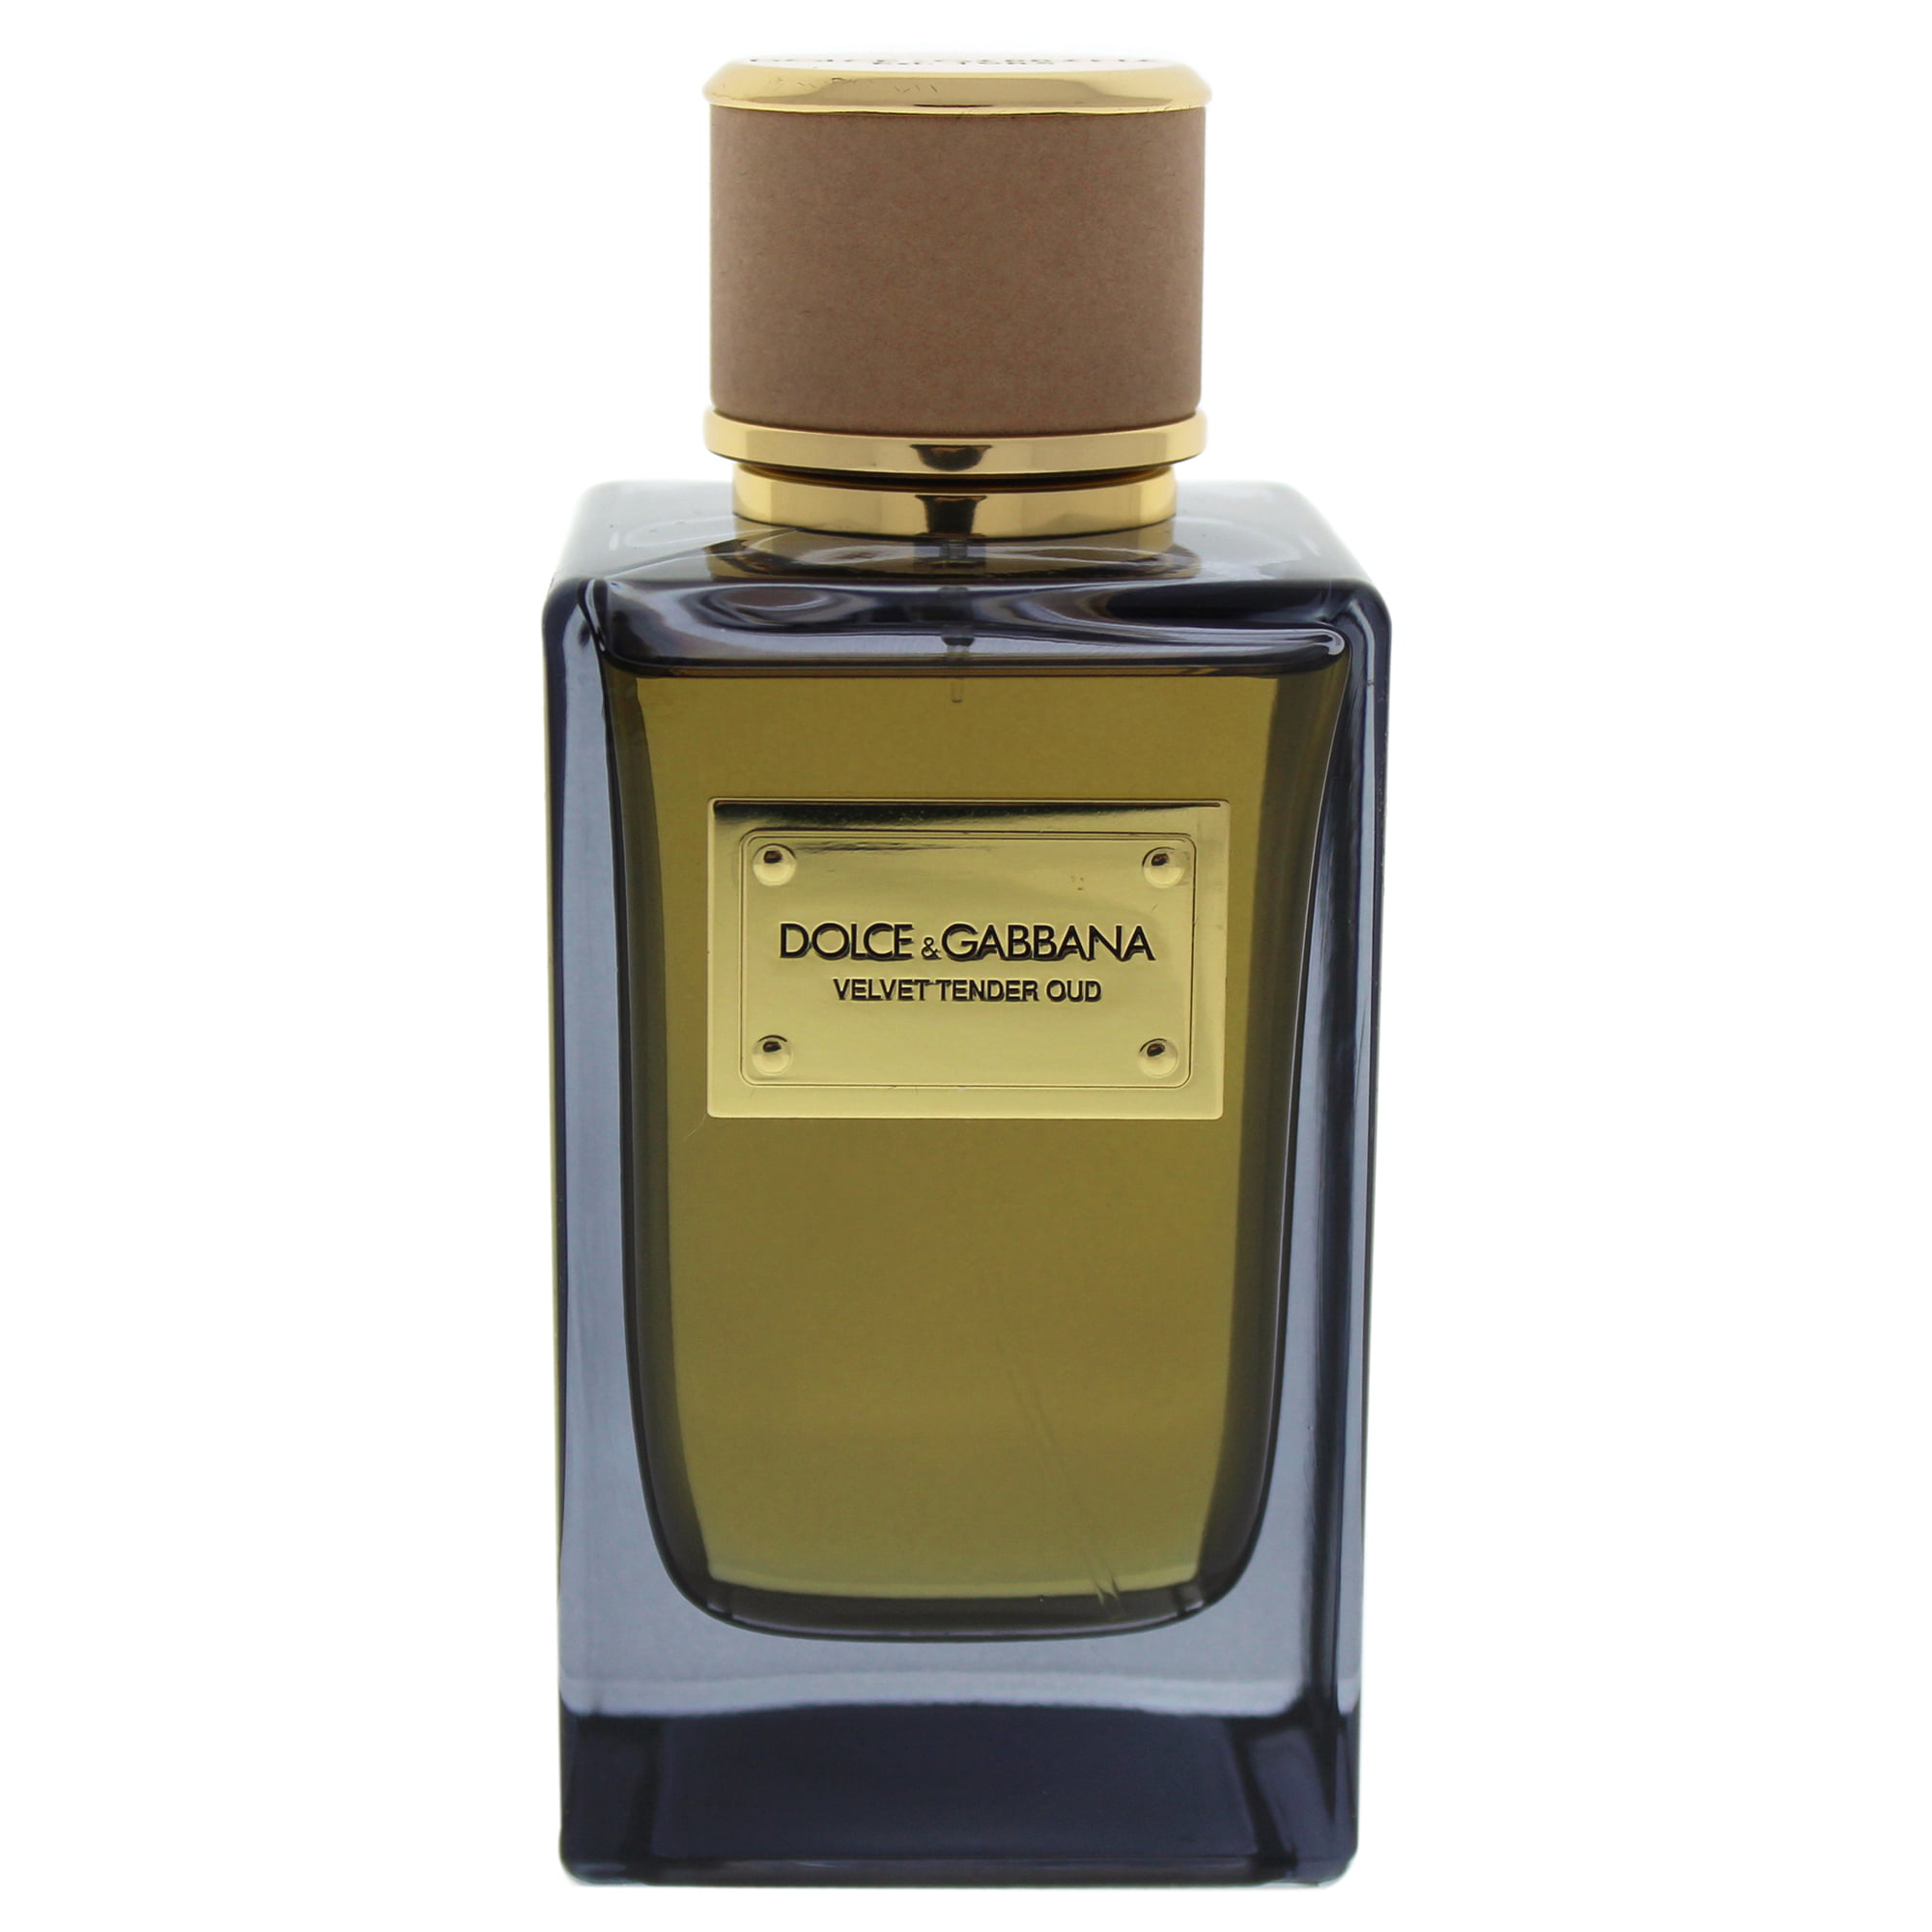 dolce and gabbana oud perfume